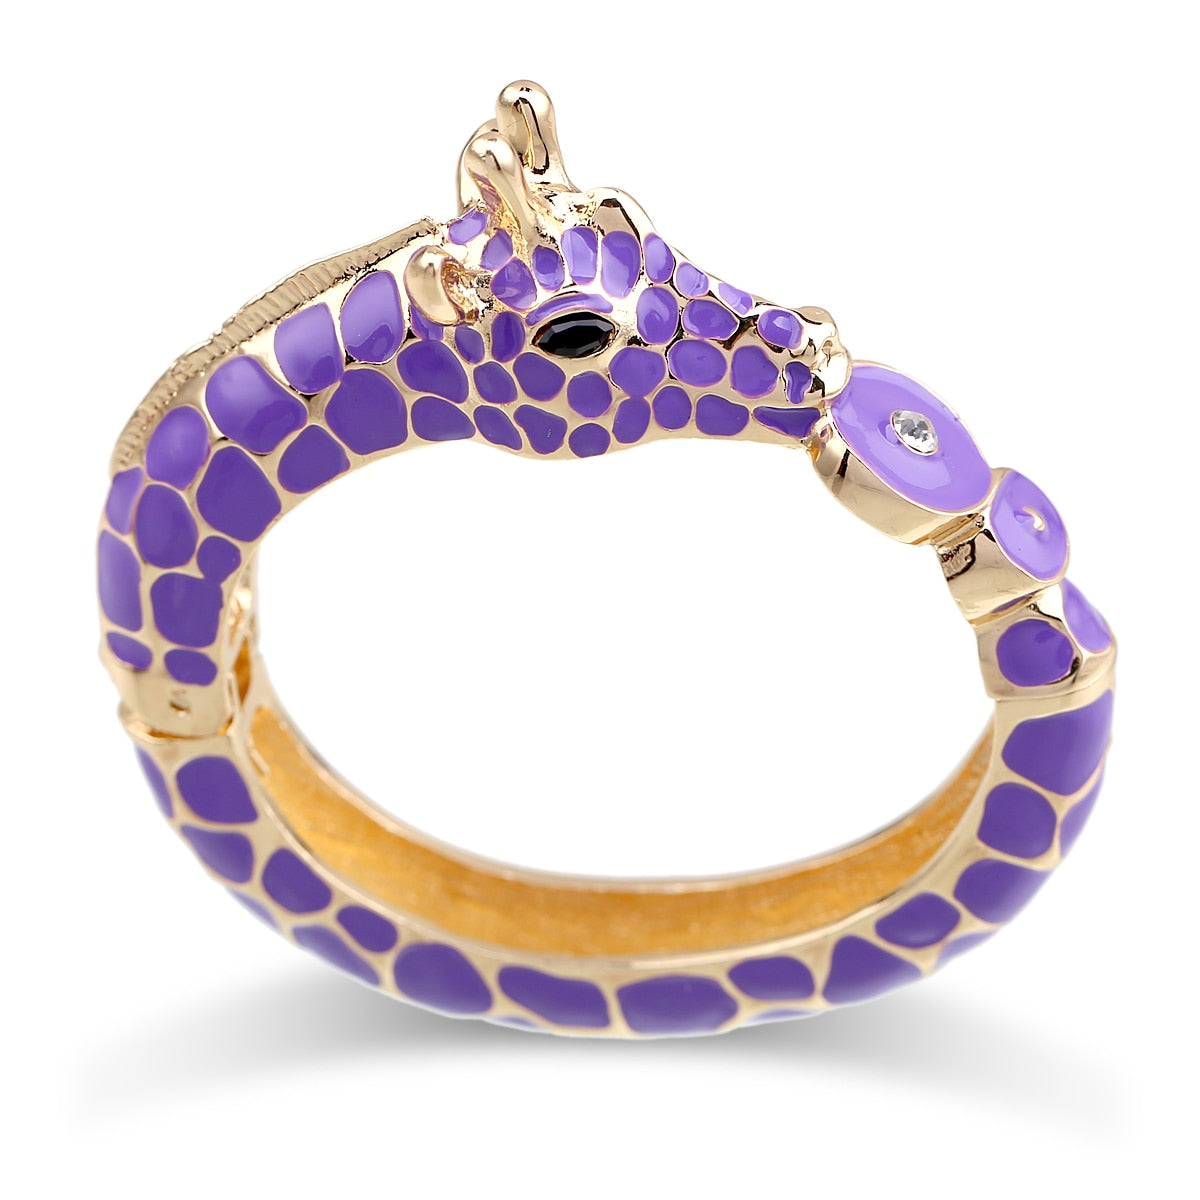 Realistic Giraffe Cuff Bracelet - Style's Bug Purple